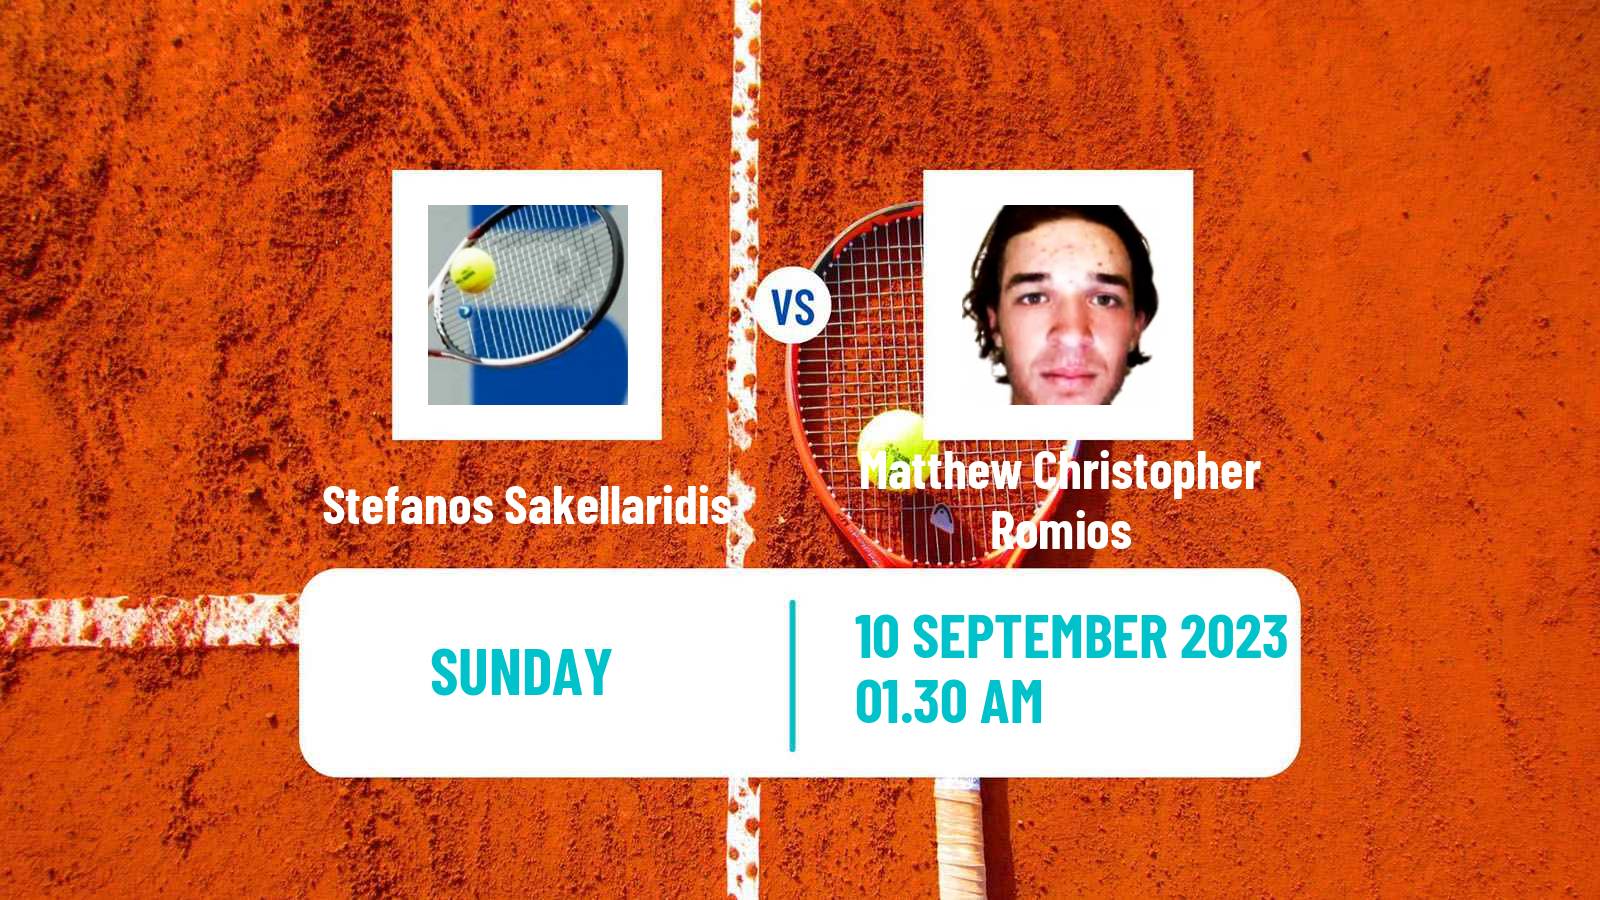 Tennis Guangzhou Challenger Men Stefanos Sakellaridis - Matthew Christopher Romios